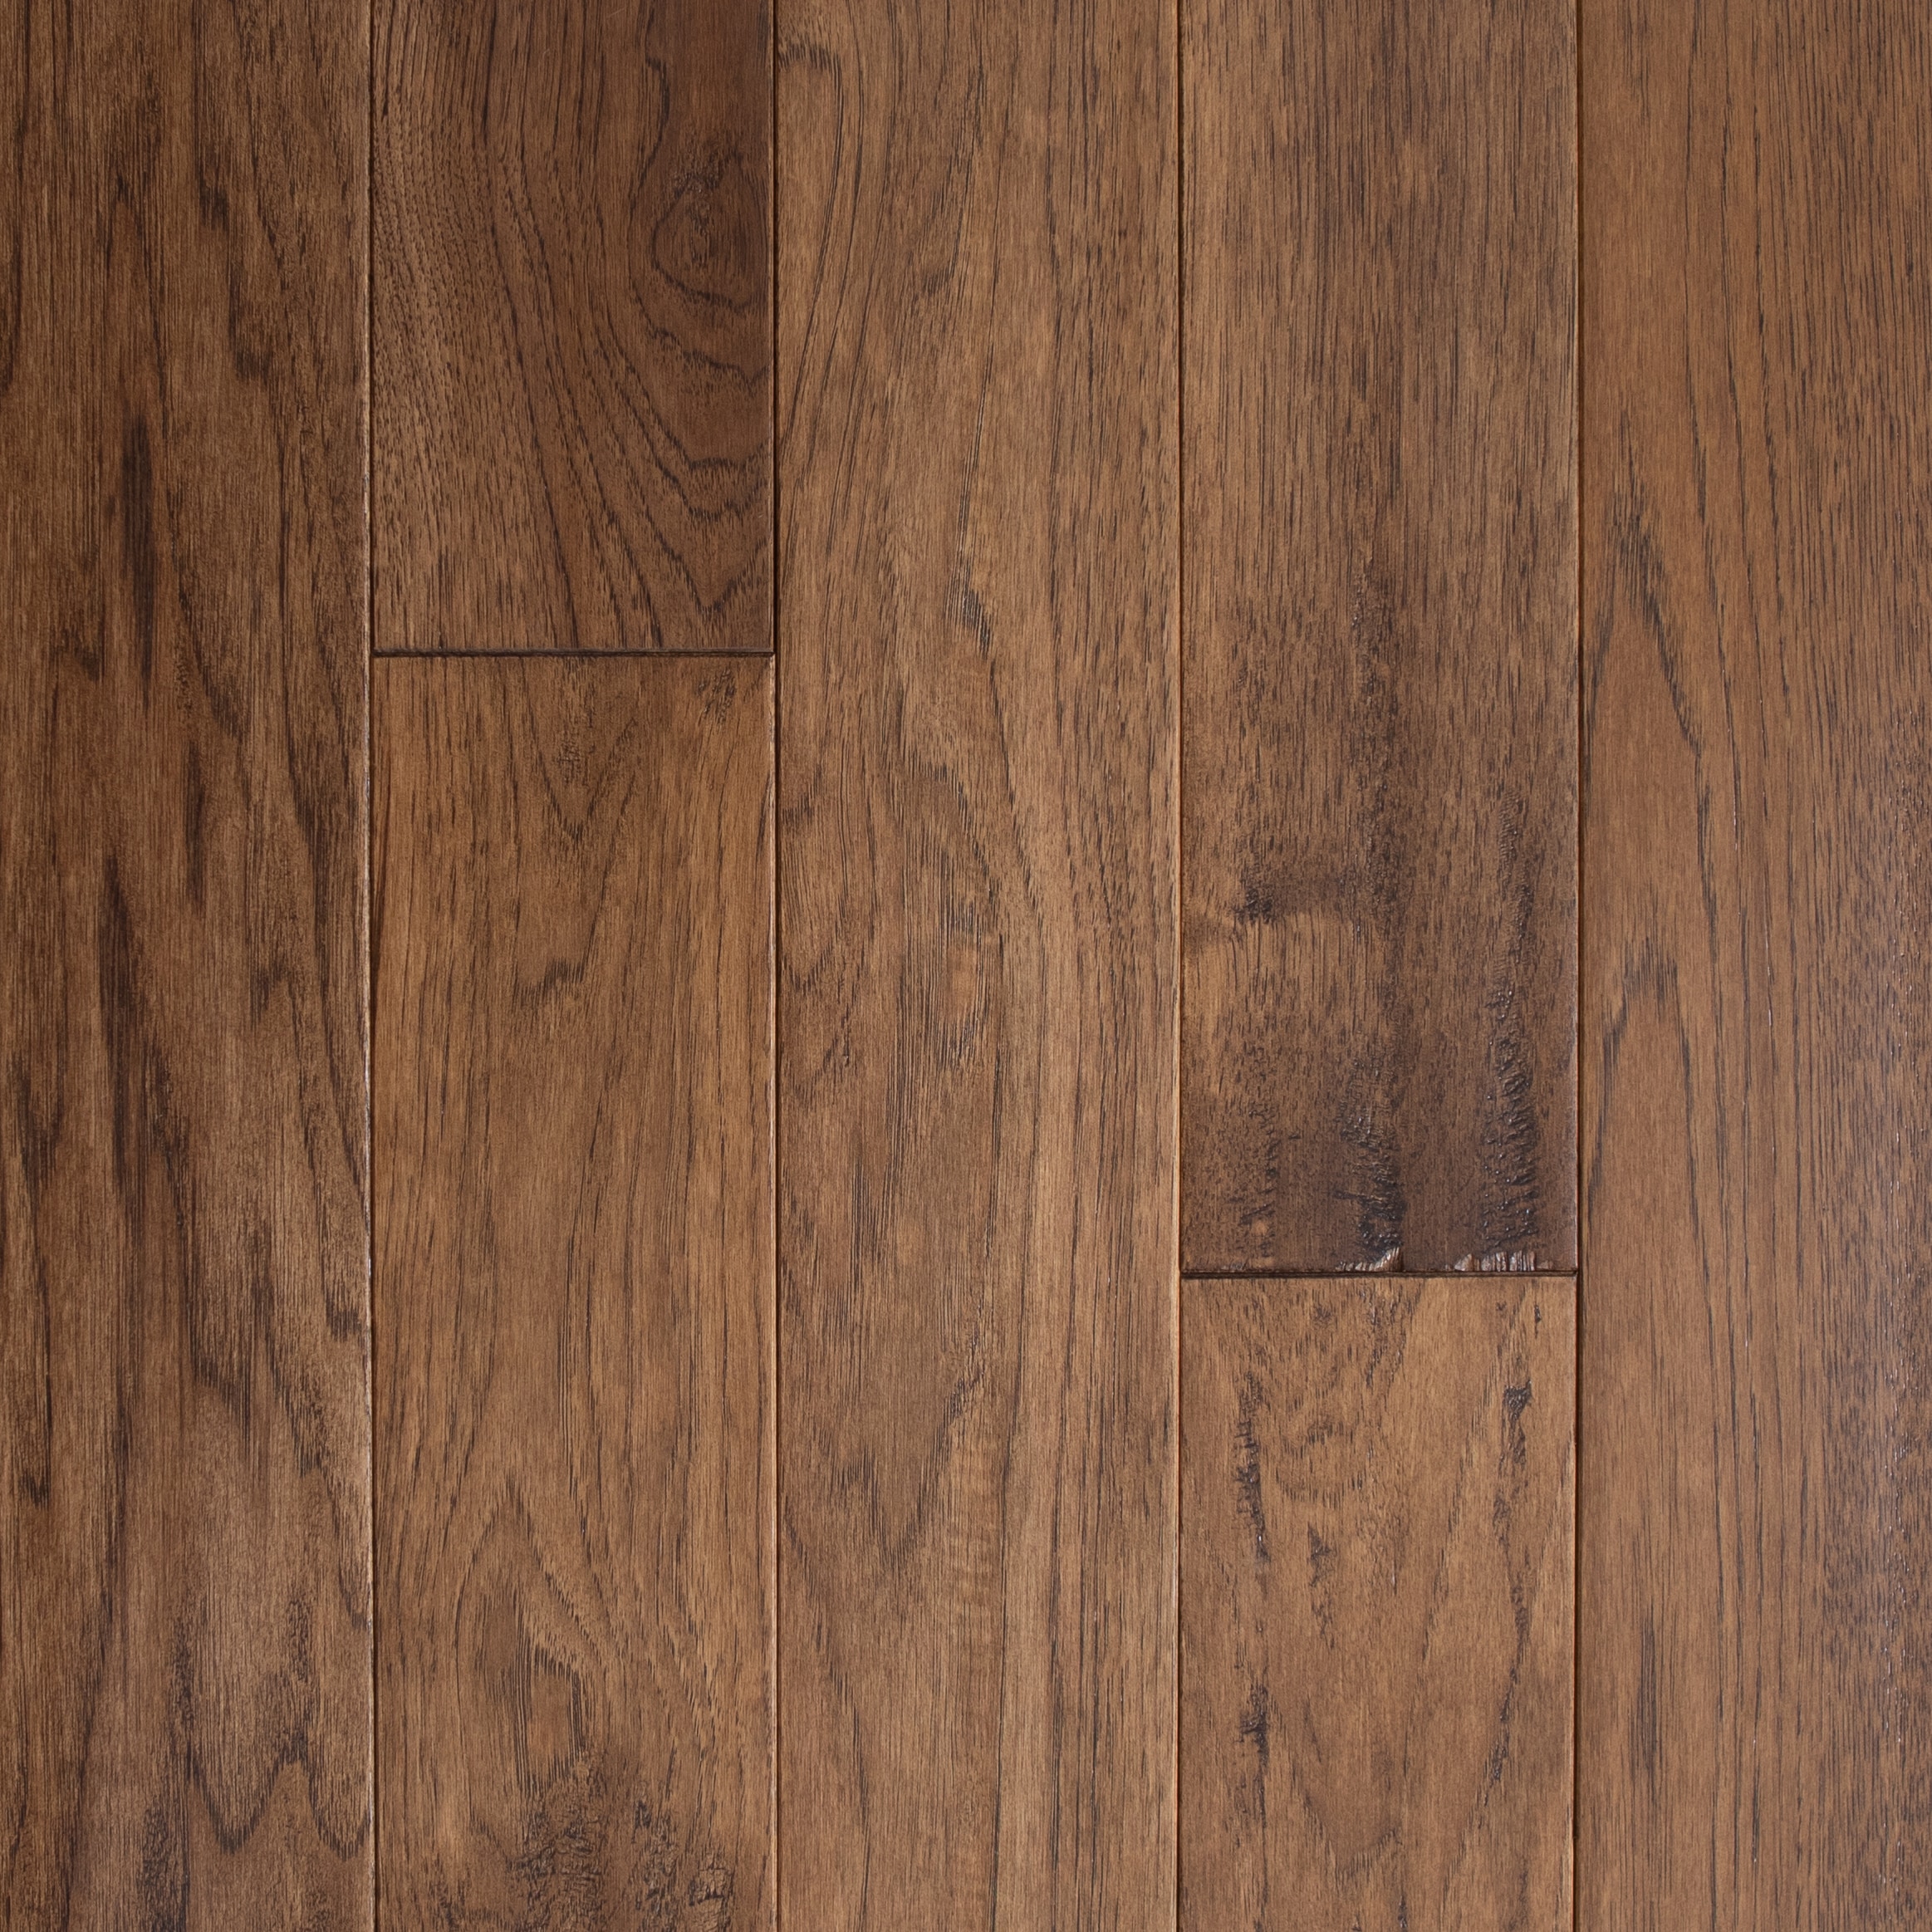 Solid Hardwood Flooring, 5 Inch Wide Hickory Hardwood Flooring